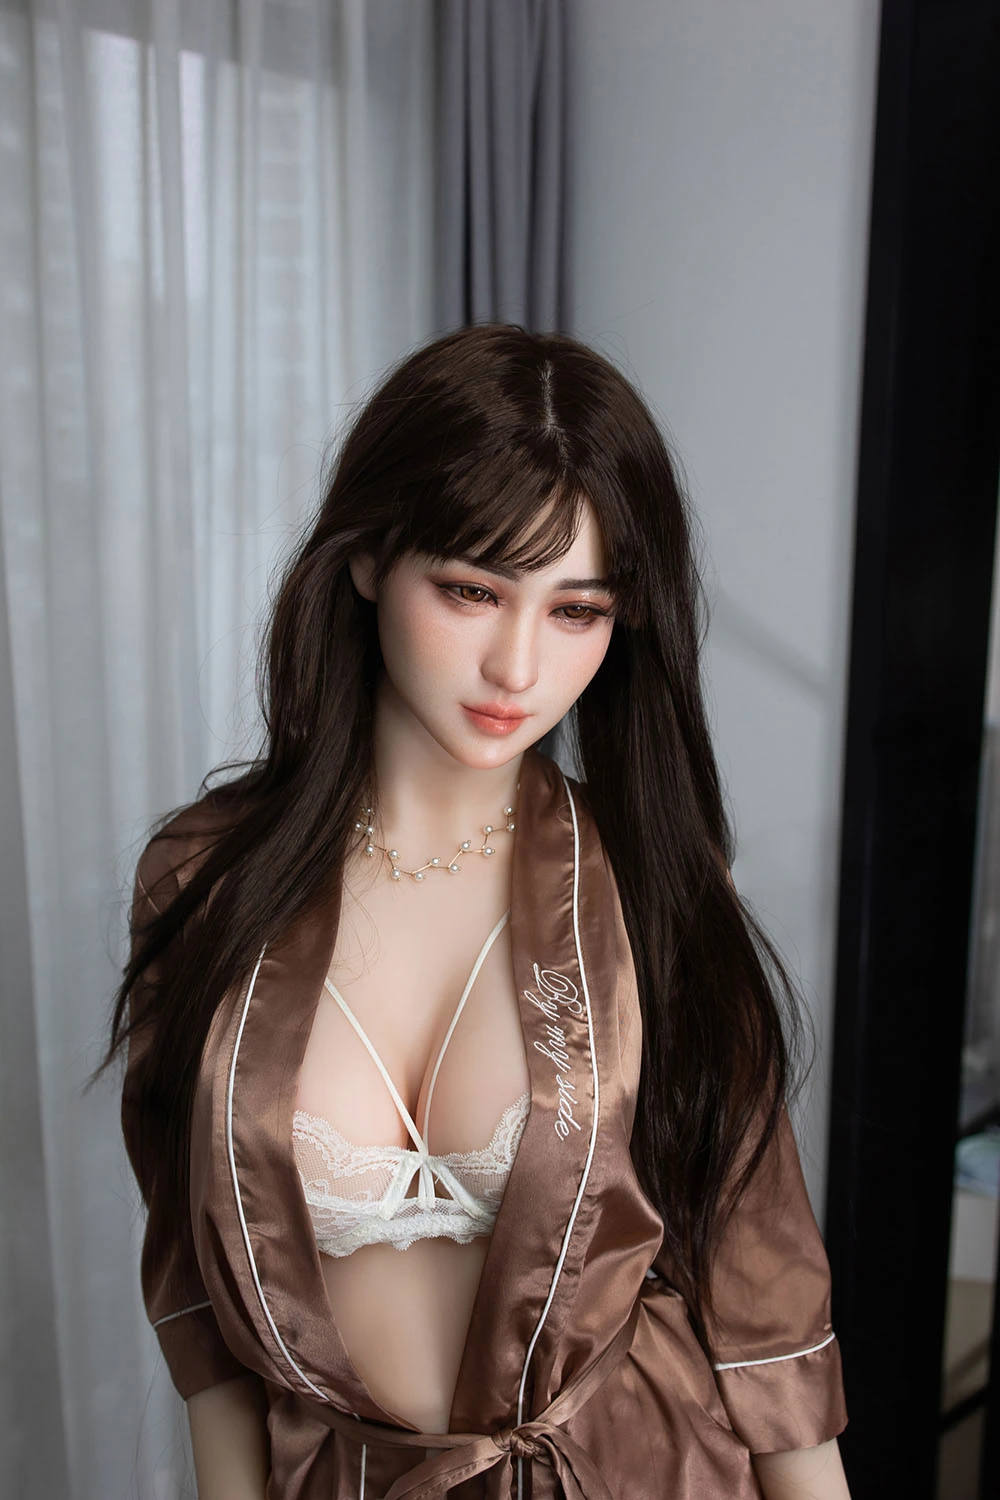 AiBei Doll erotic doll